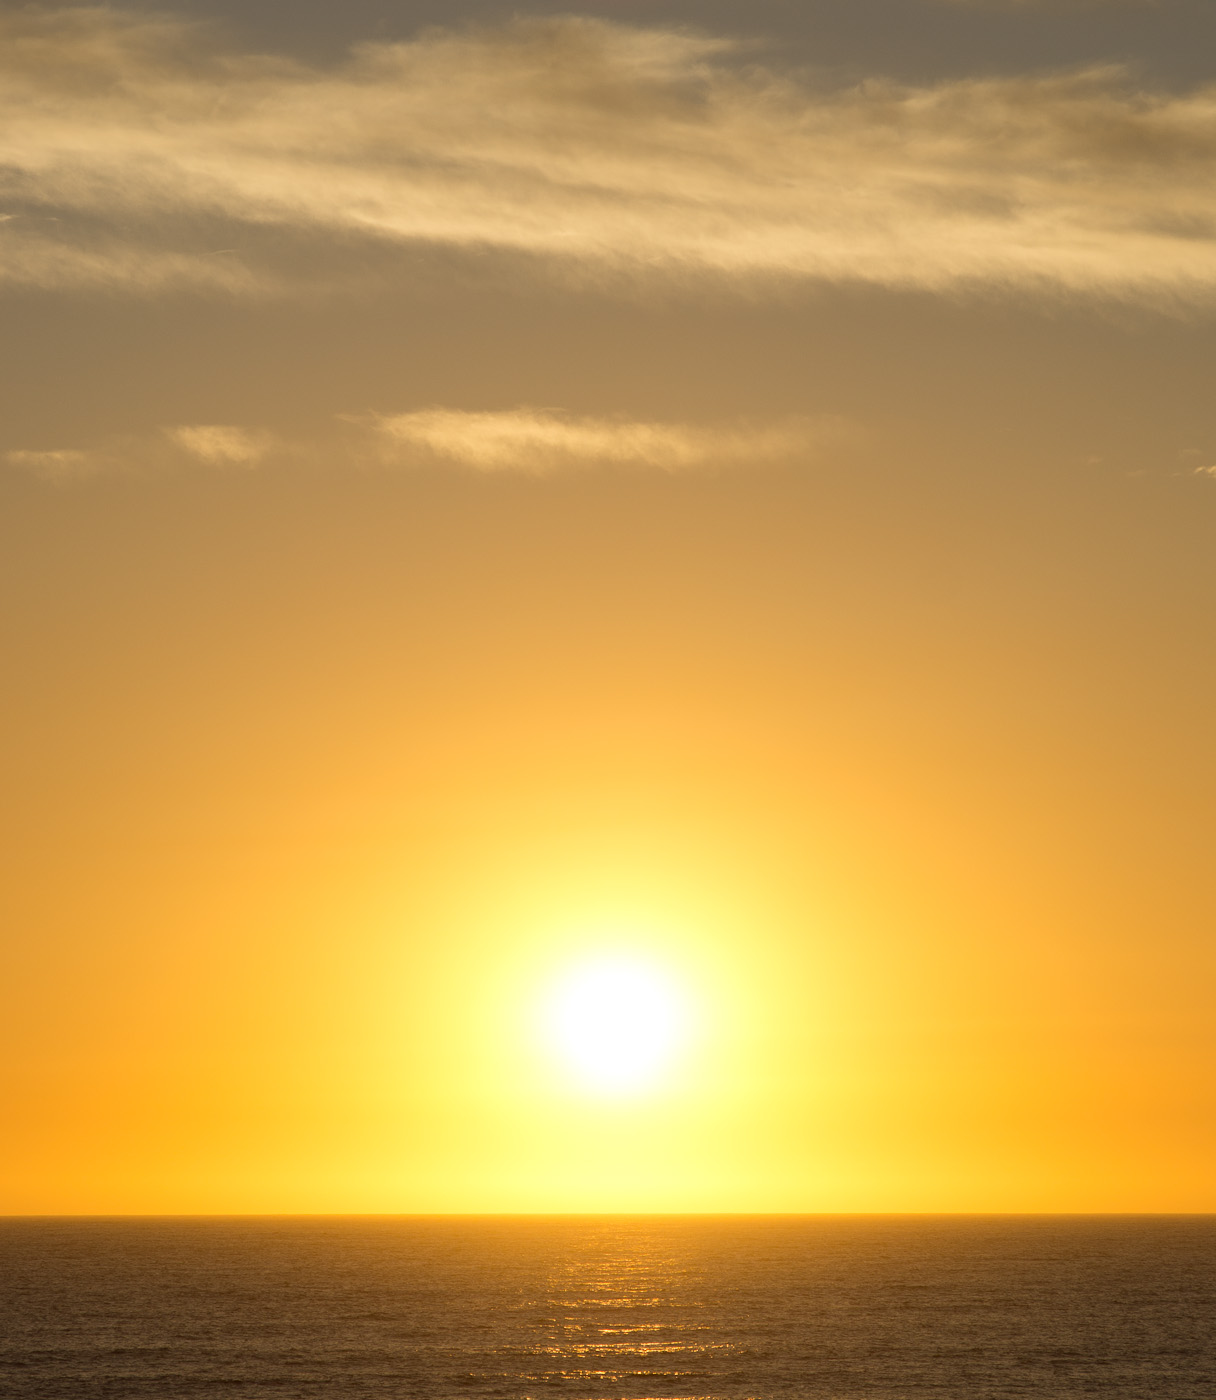 The Sun sets over the Indian Ocean in Western Australia. SOny NEX-5n and Leica Elmarit-M 90